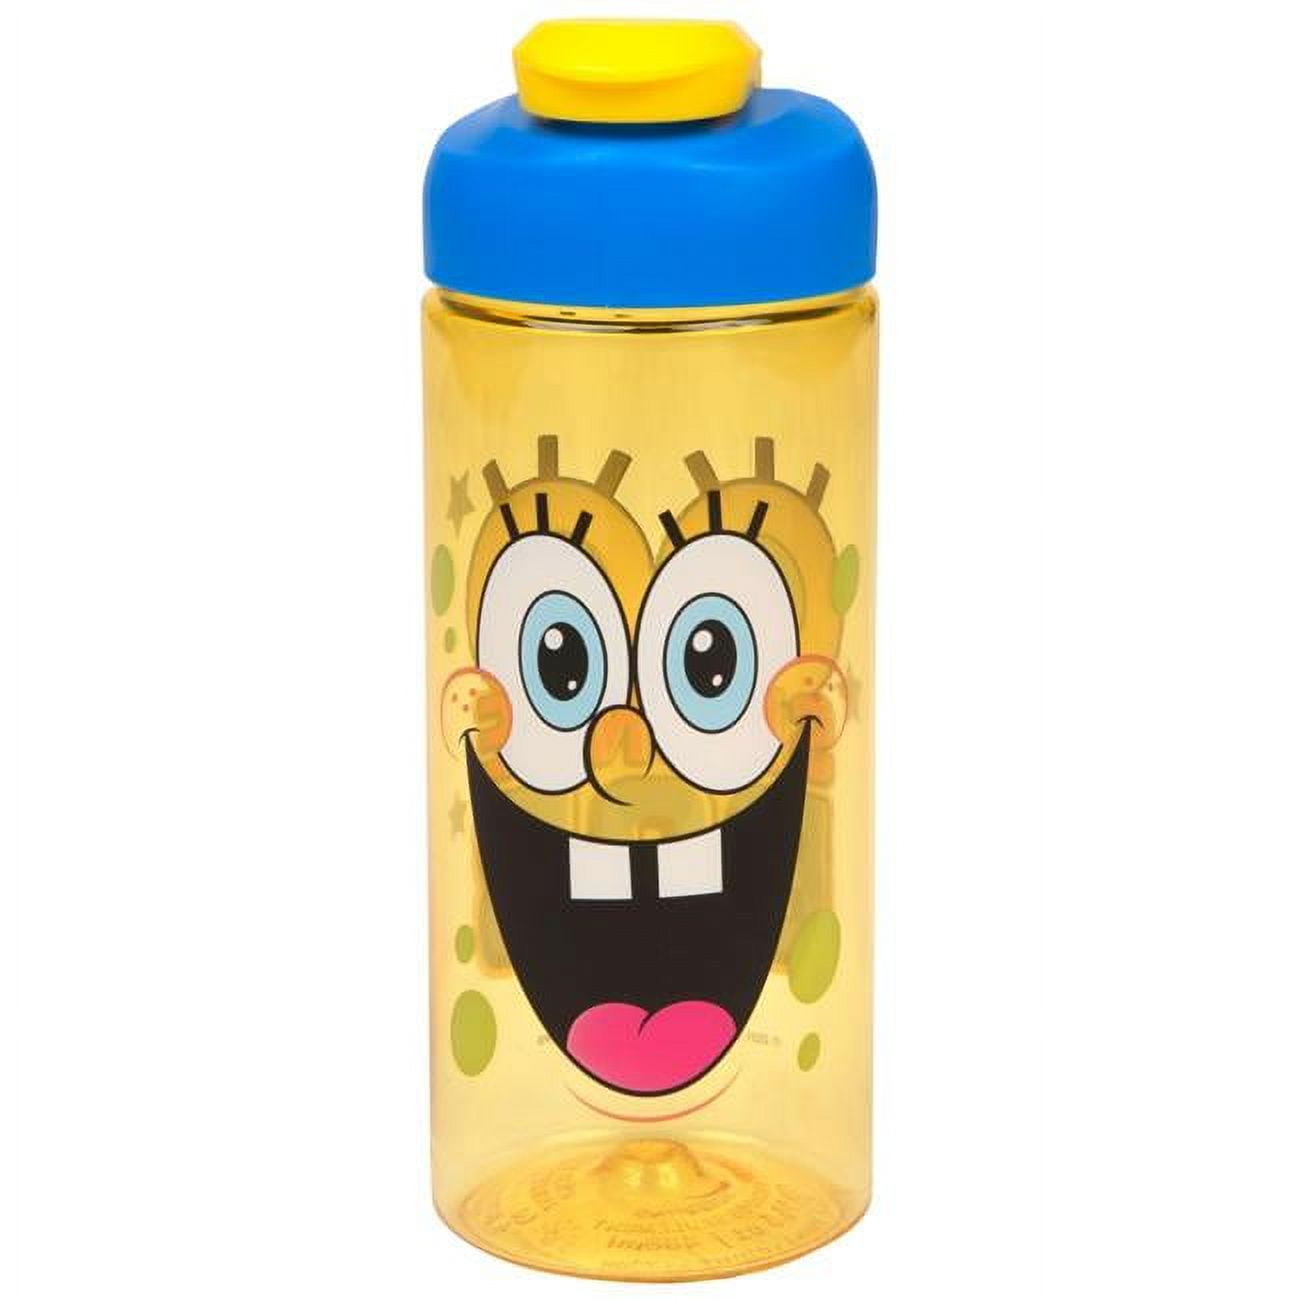 Spongebob Squarepants 824878 16.5 oz Sullivan Bottle 